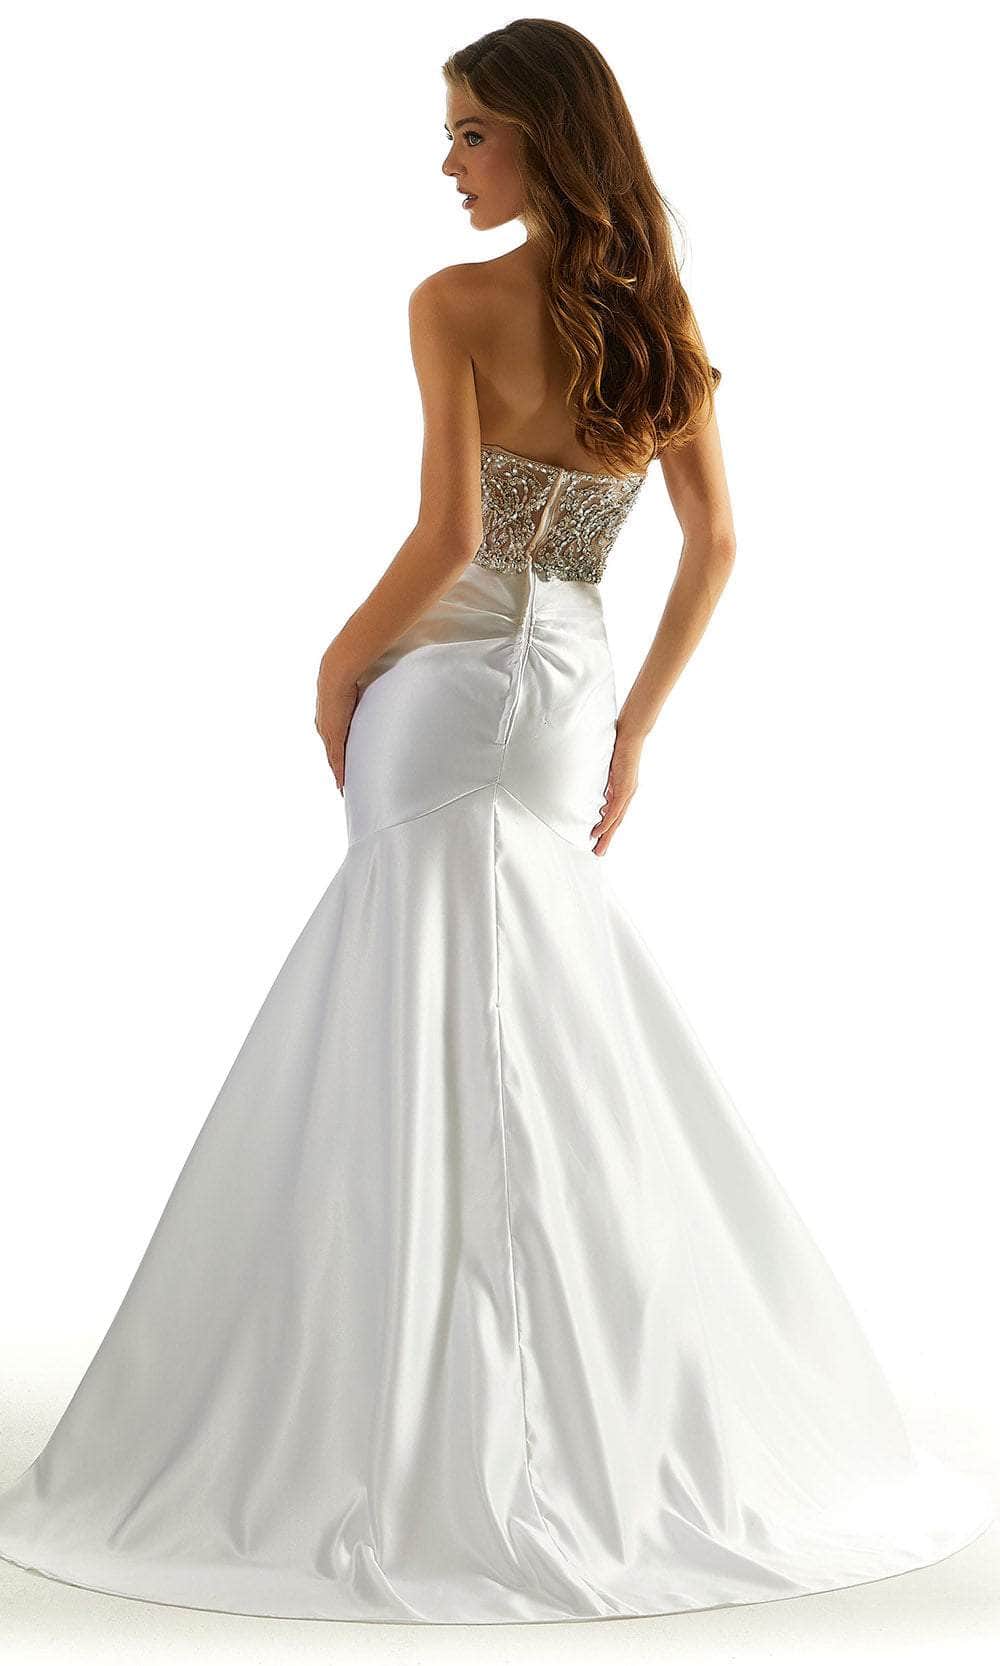 Mori Lee 49090 - Strapless Mermaid Gown Prom Dress